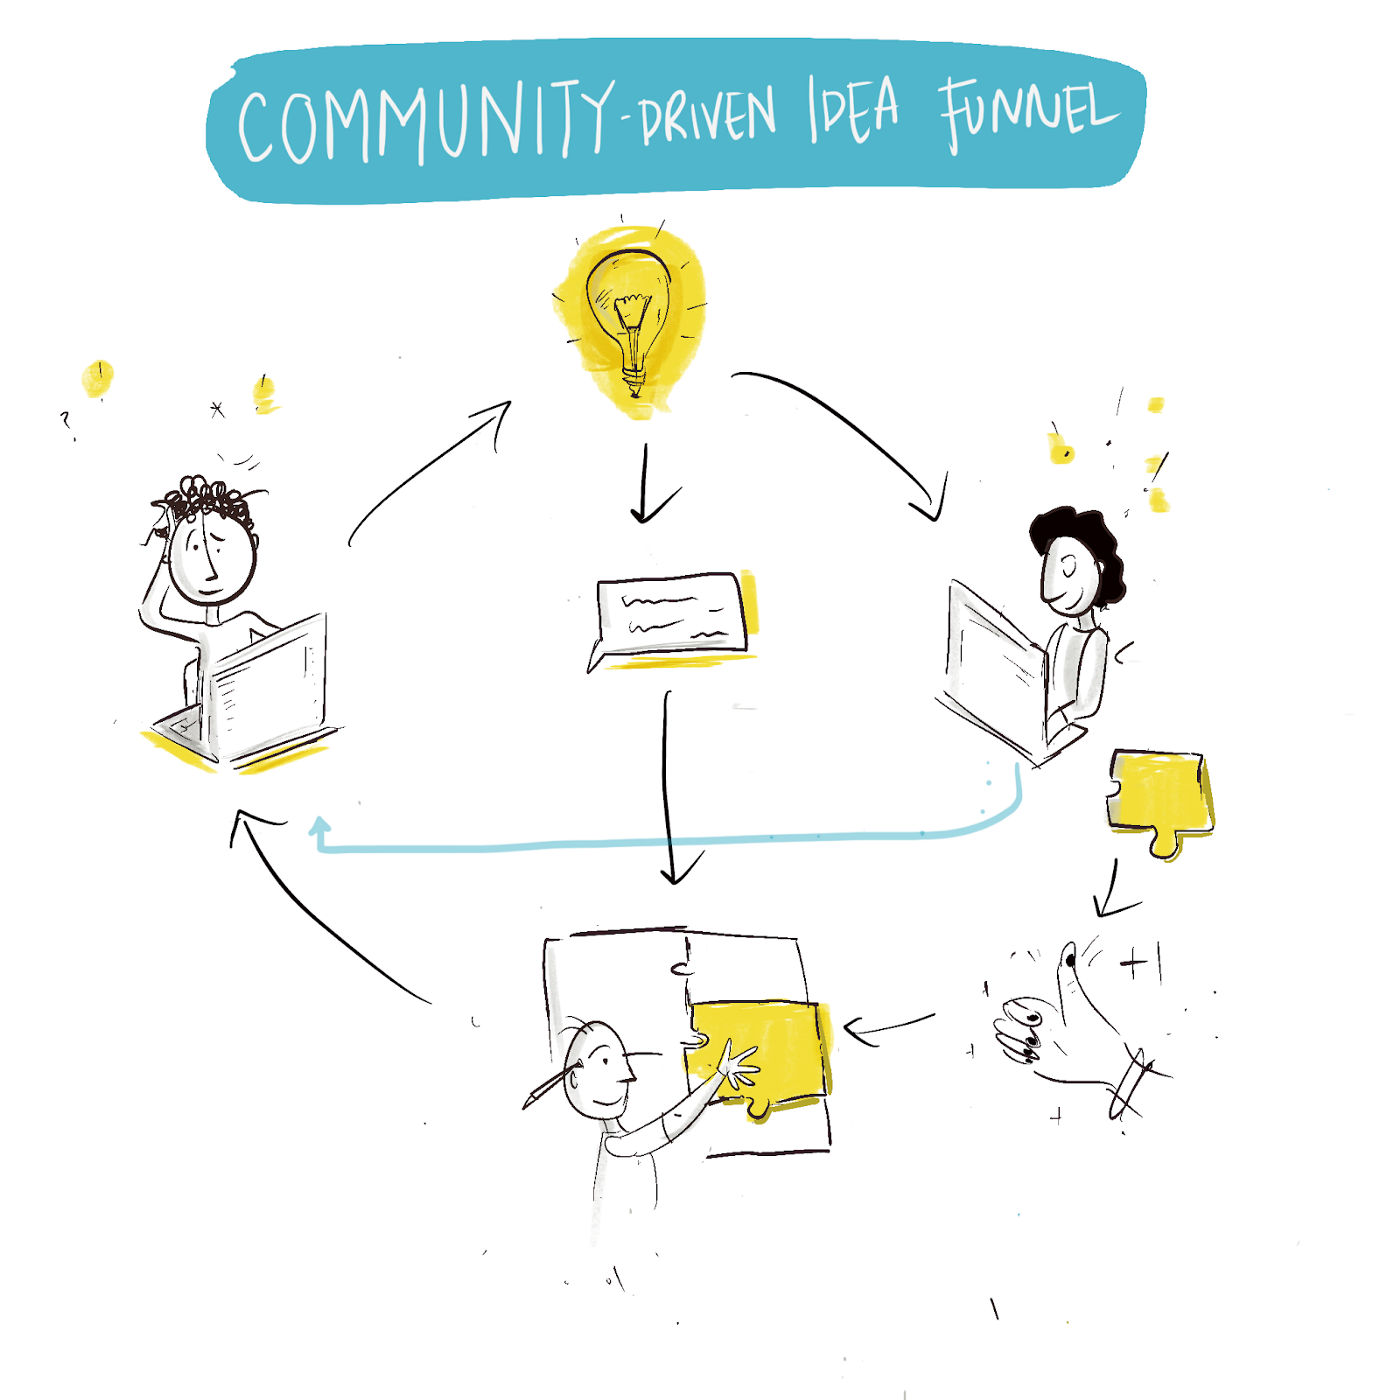 Illustration of community driven idea funnel